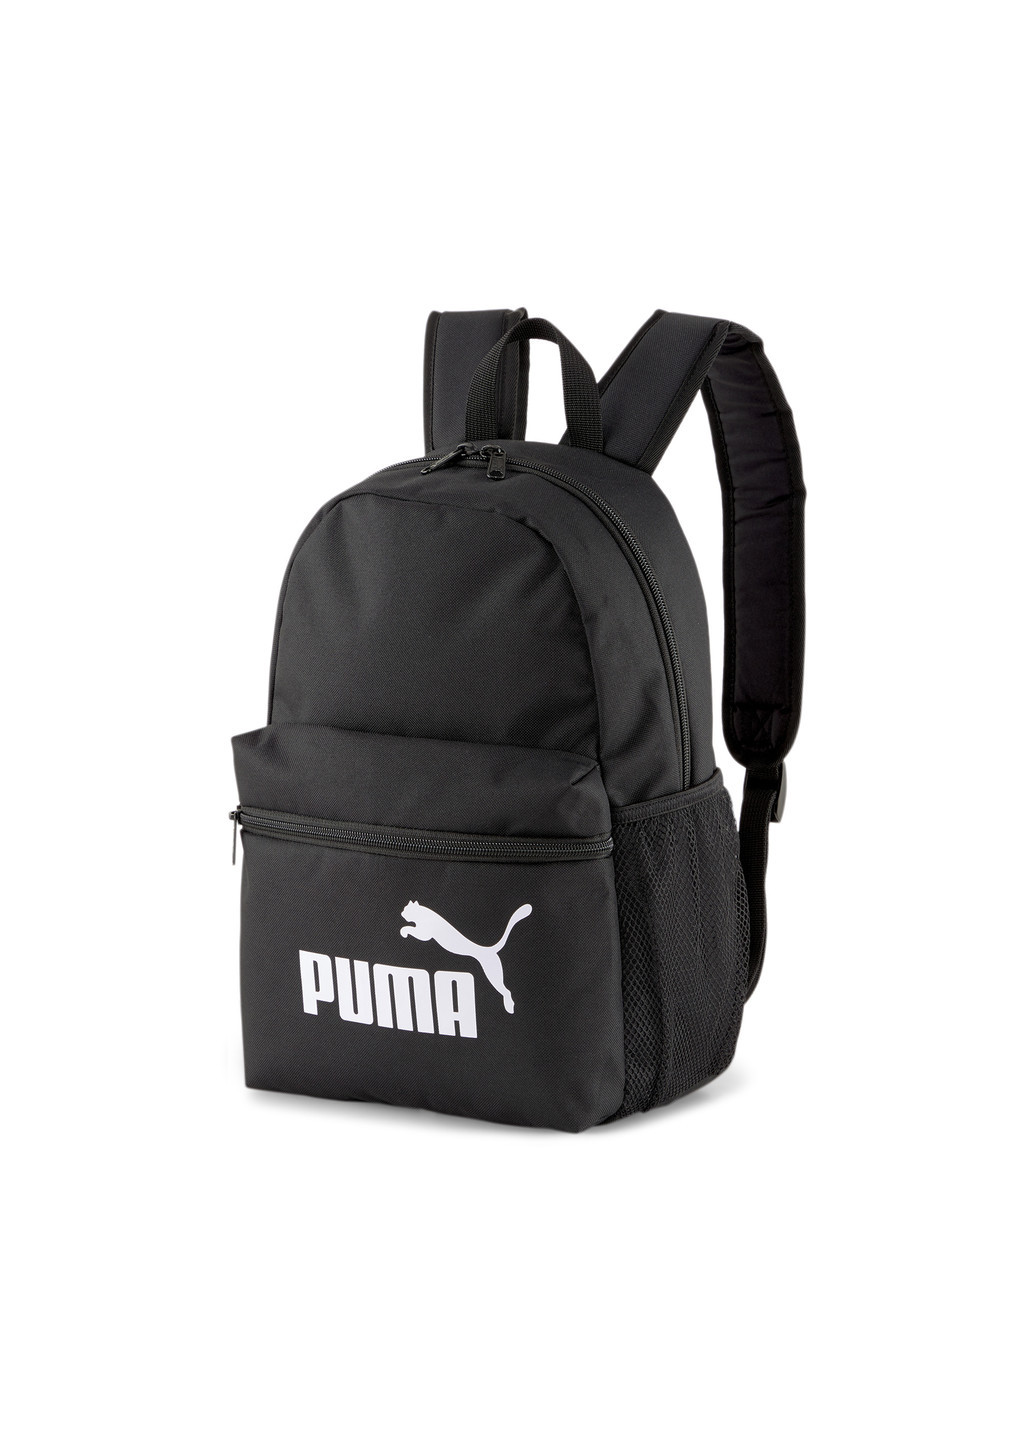 Дитячий рюкзак Phase Small Youth Backpack Puma однотонний чорний спортивний